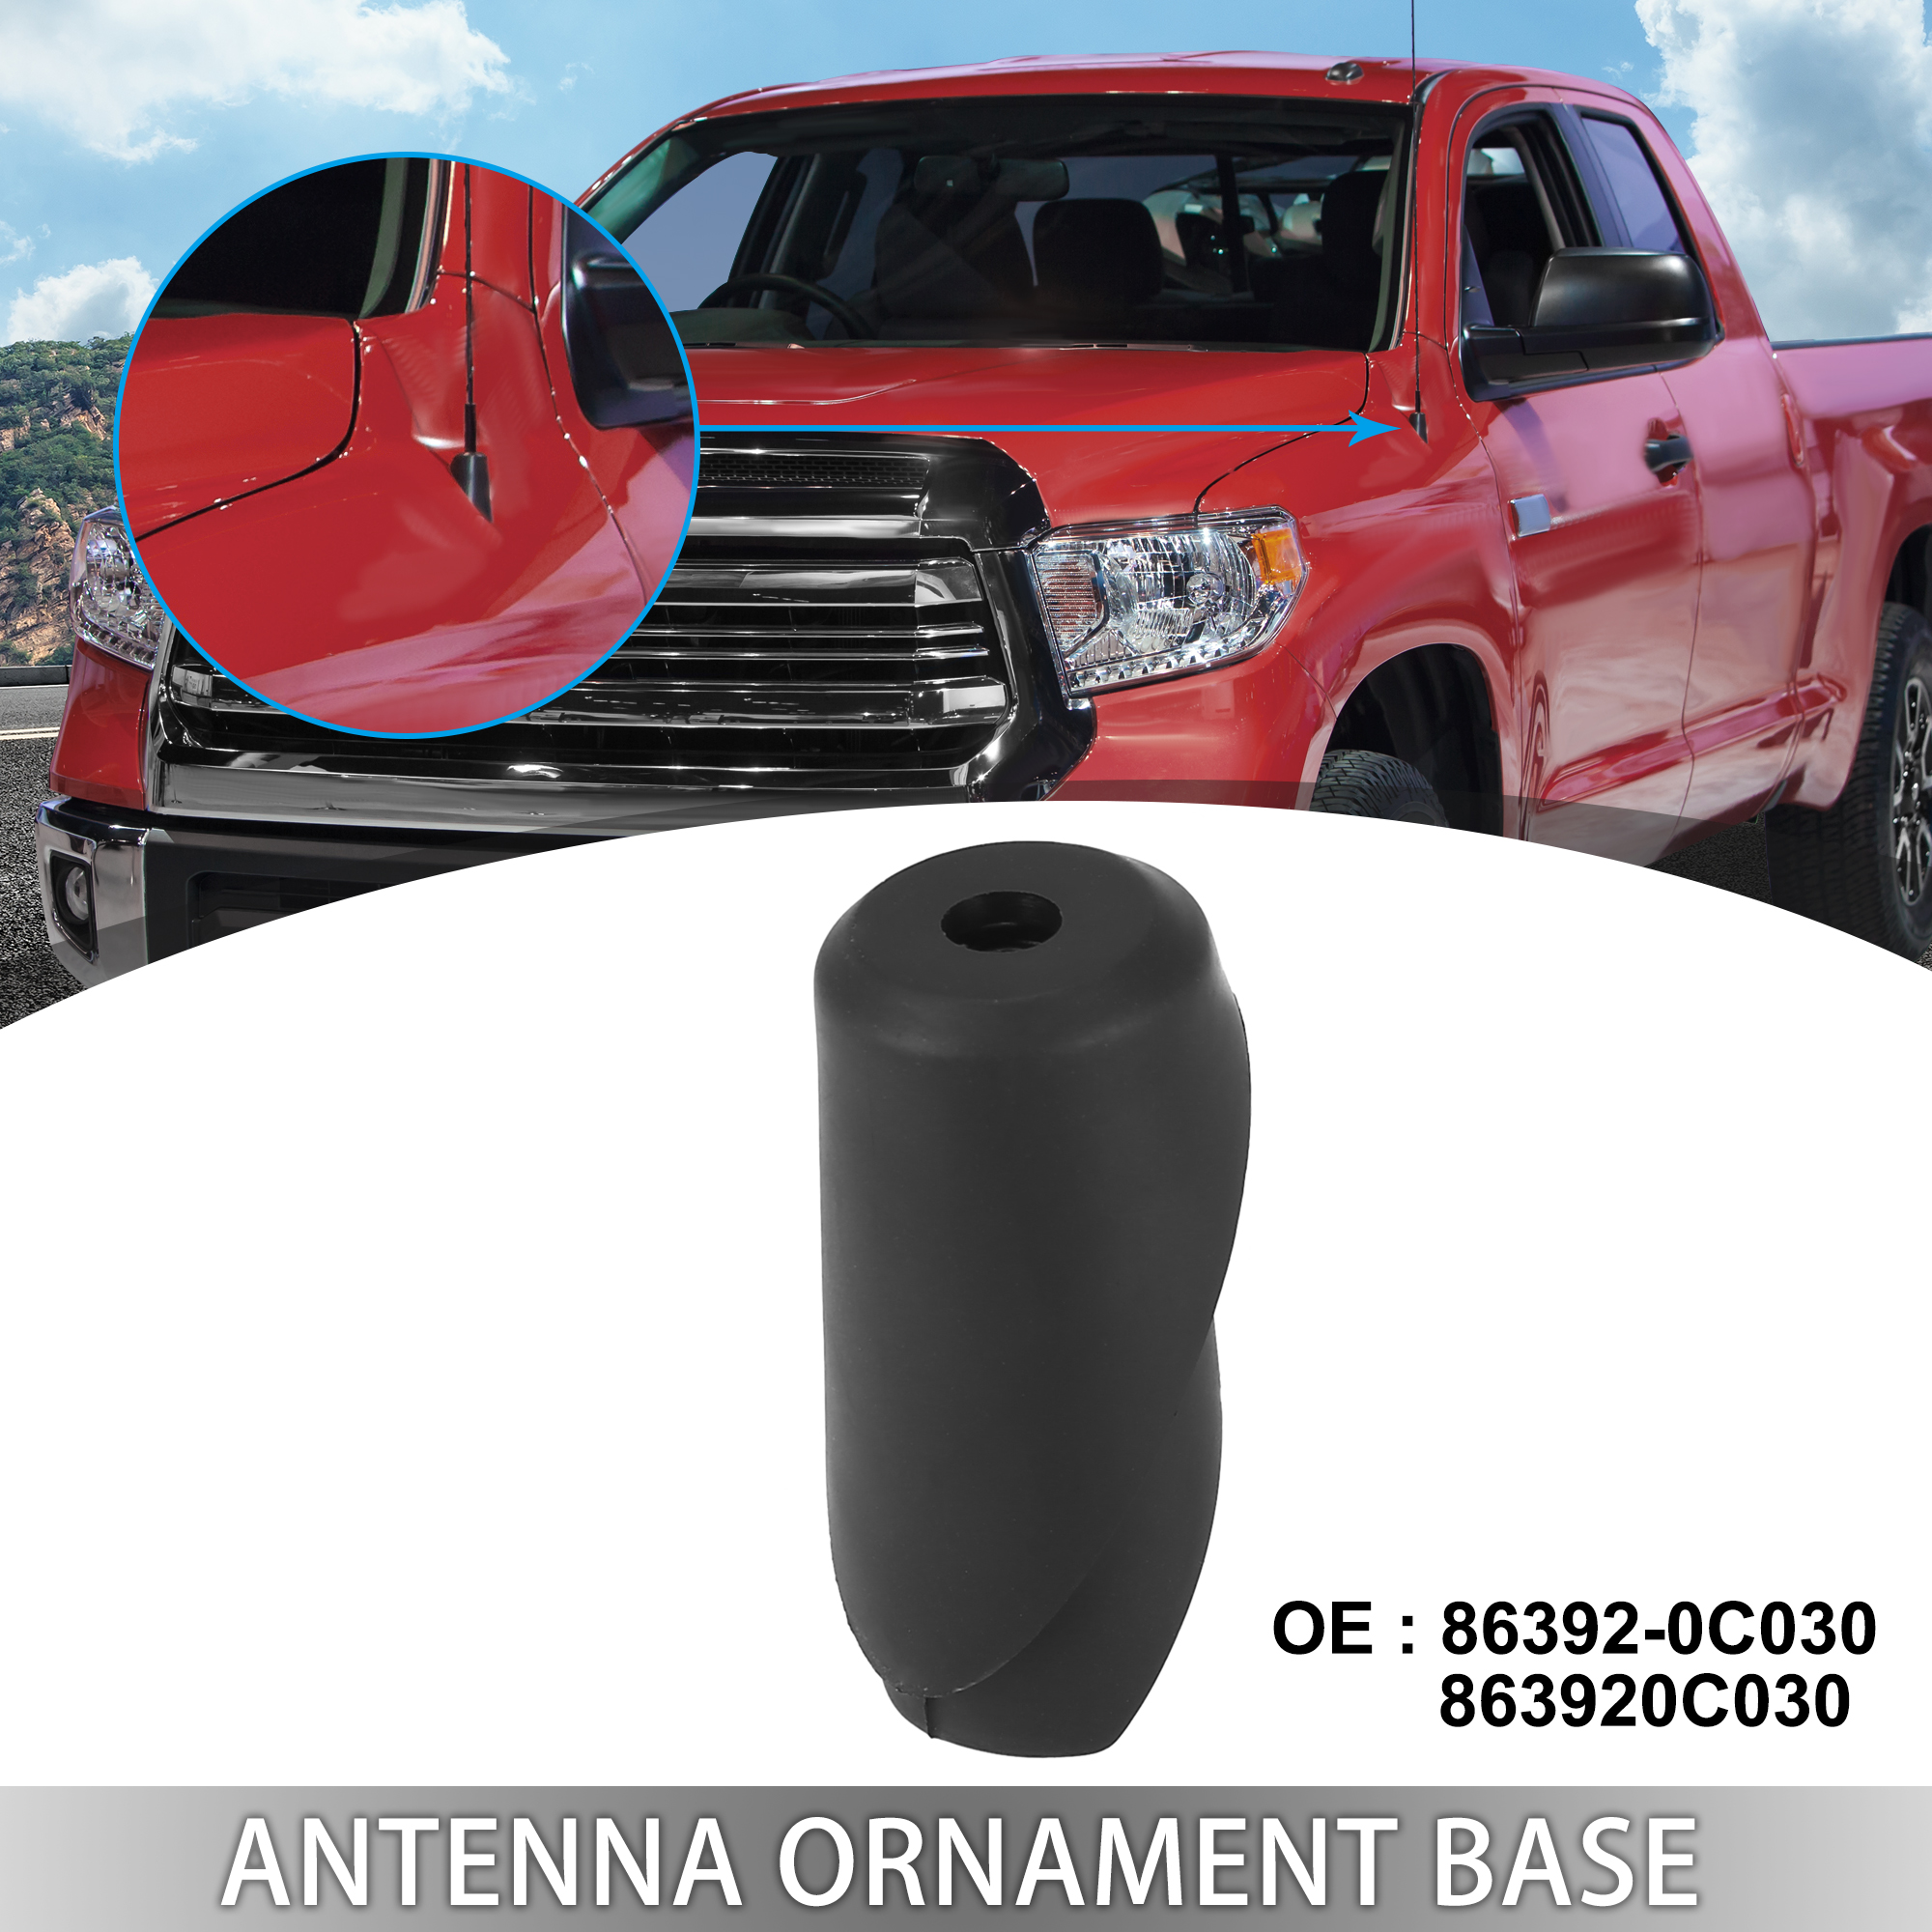 Unique Bargains Antenna Grommet Antenna Ornament Base 86392-0C030 863920C030 for Toyota Tundra 2014-2020